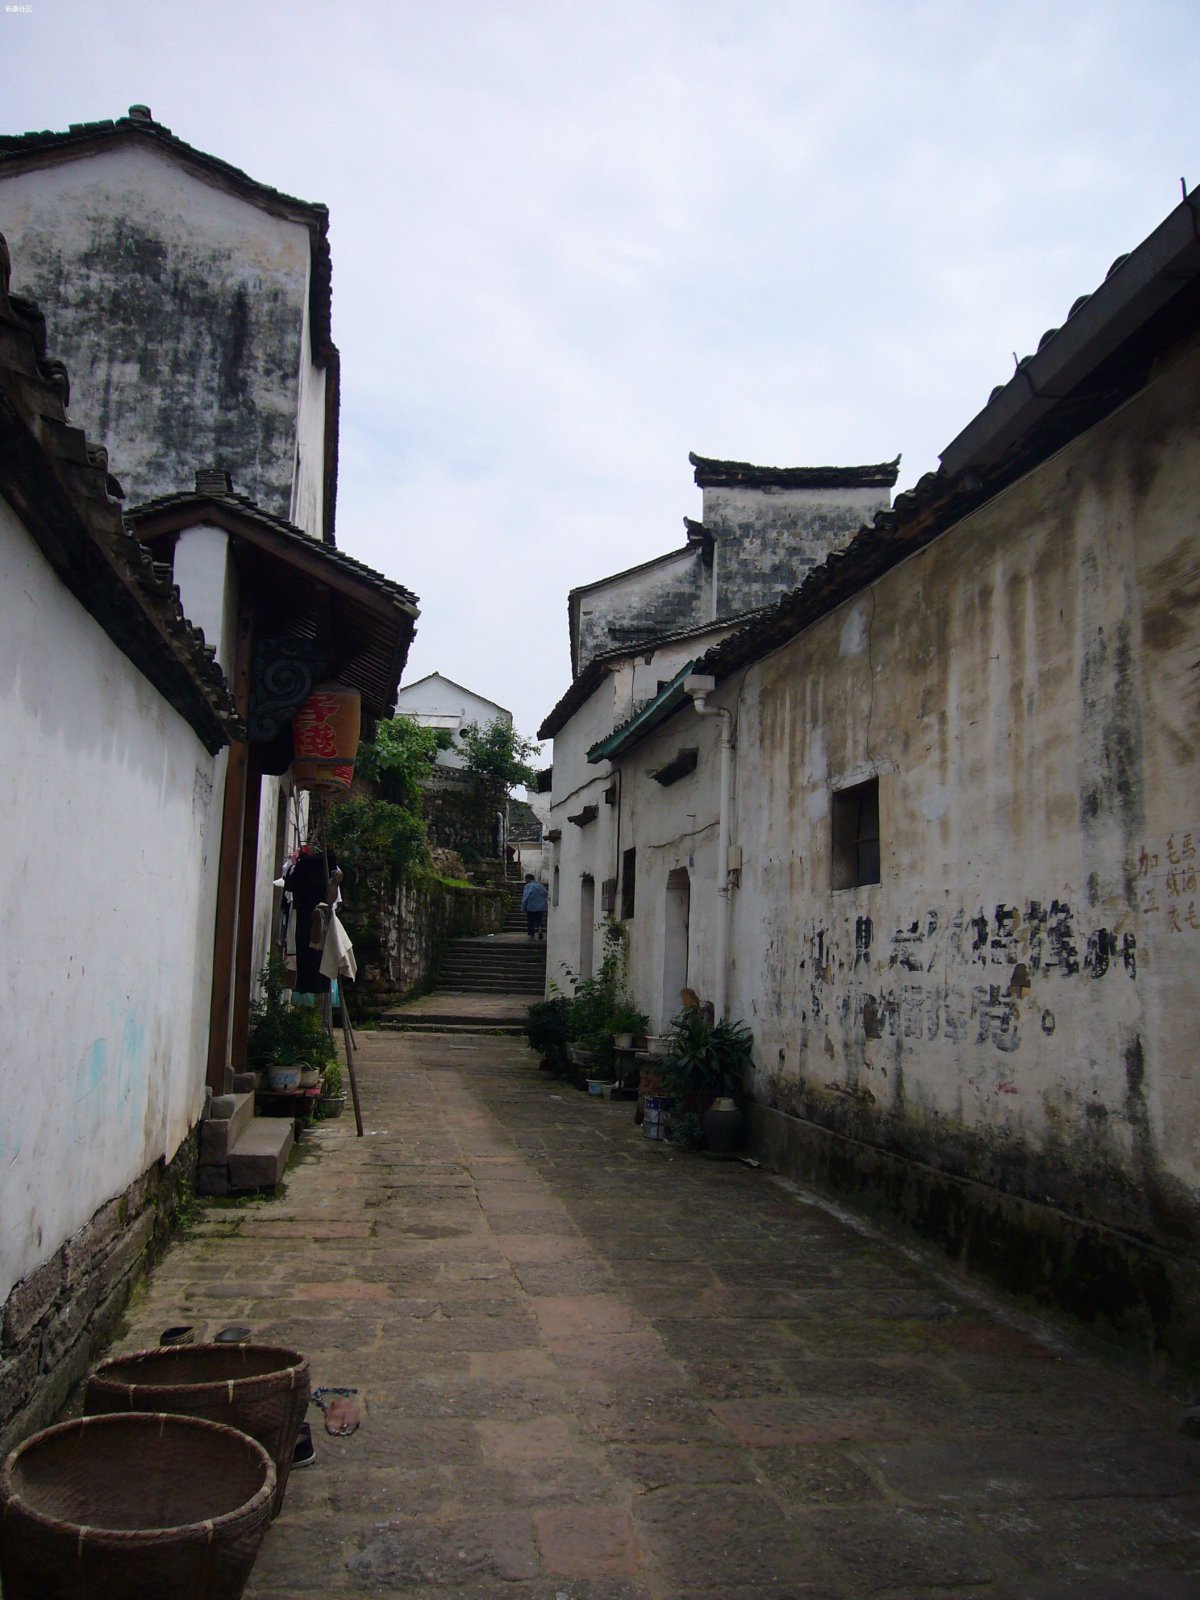 Pictures of Bagua Village in Zhuge, Zhejiang